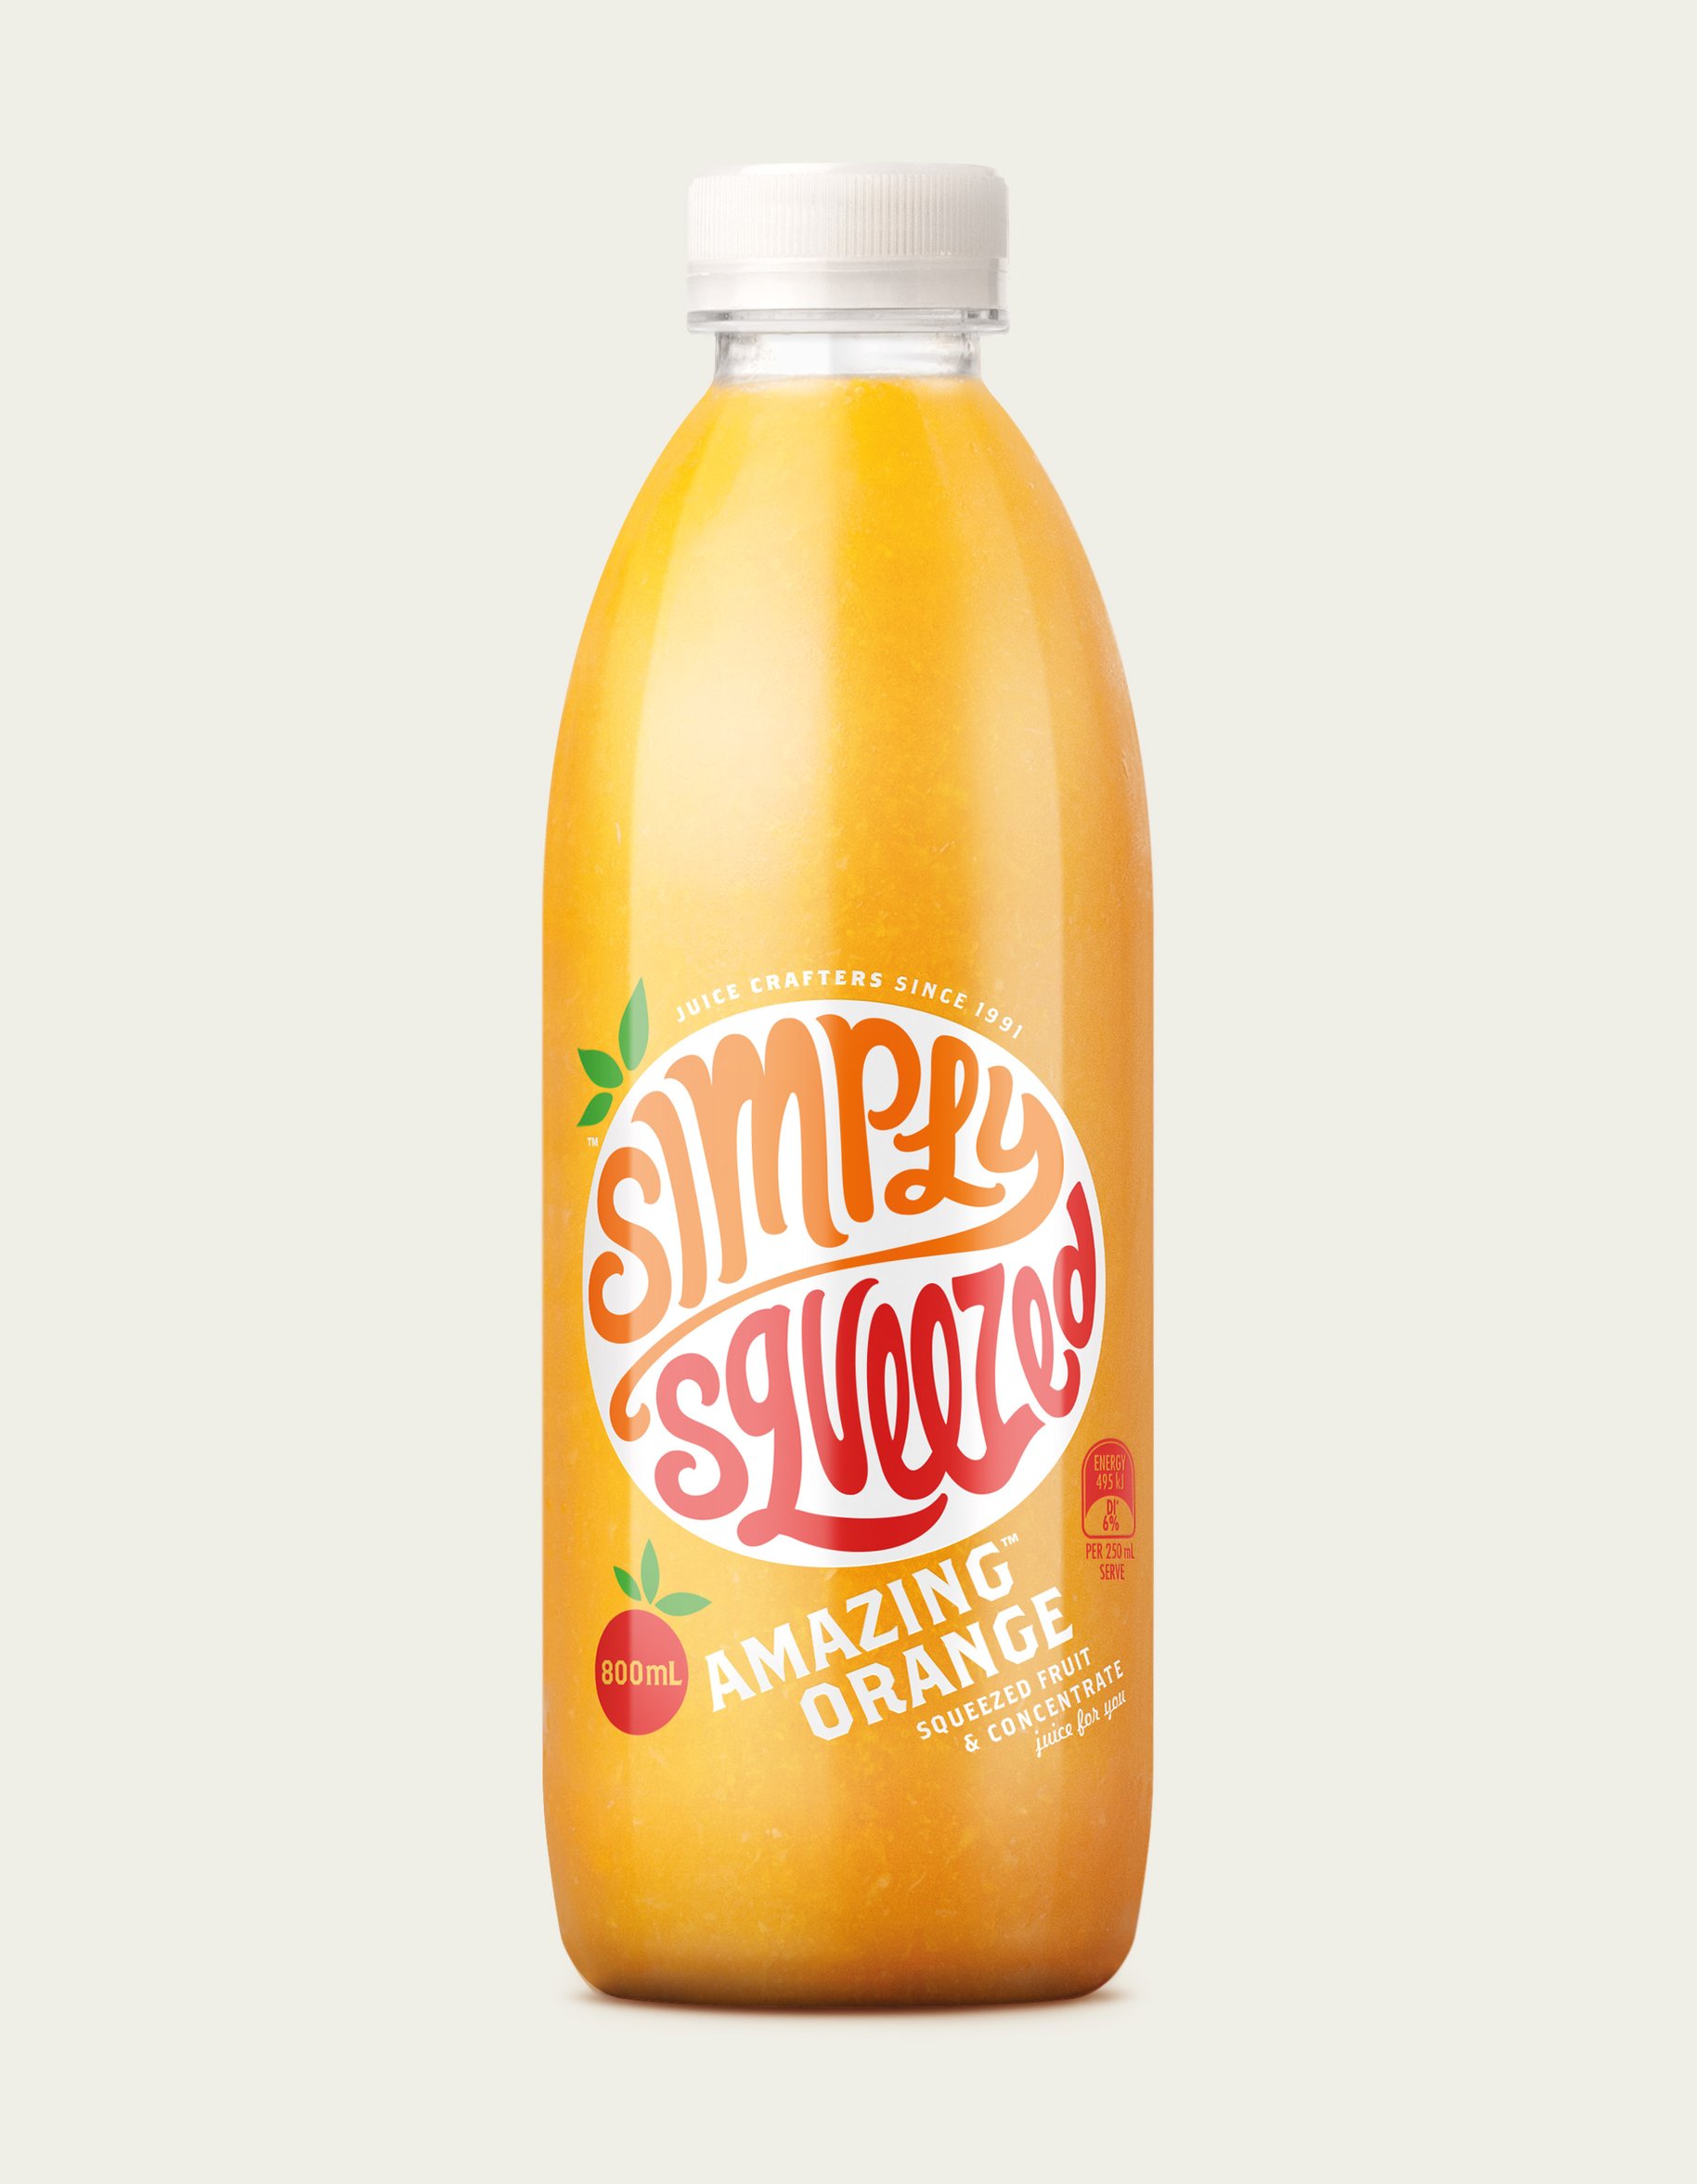 Simply Squeezed Orange Juice Packaging Design 